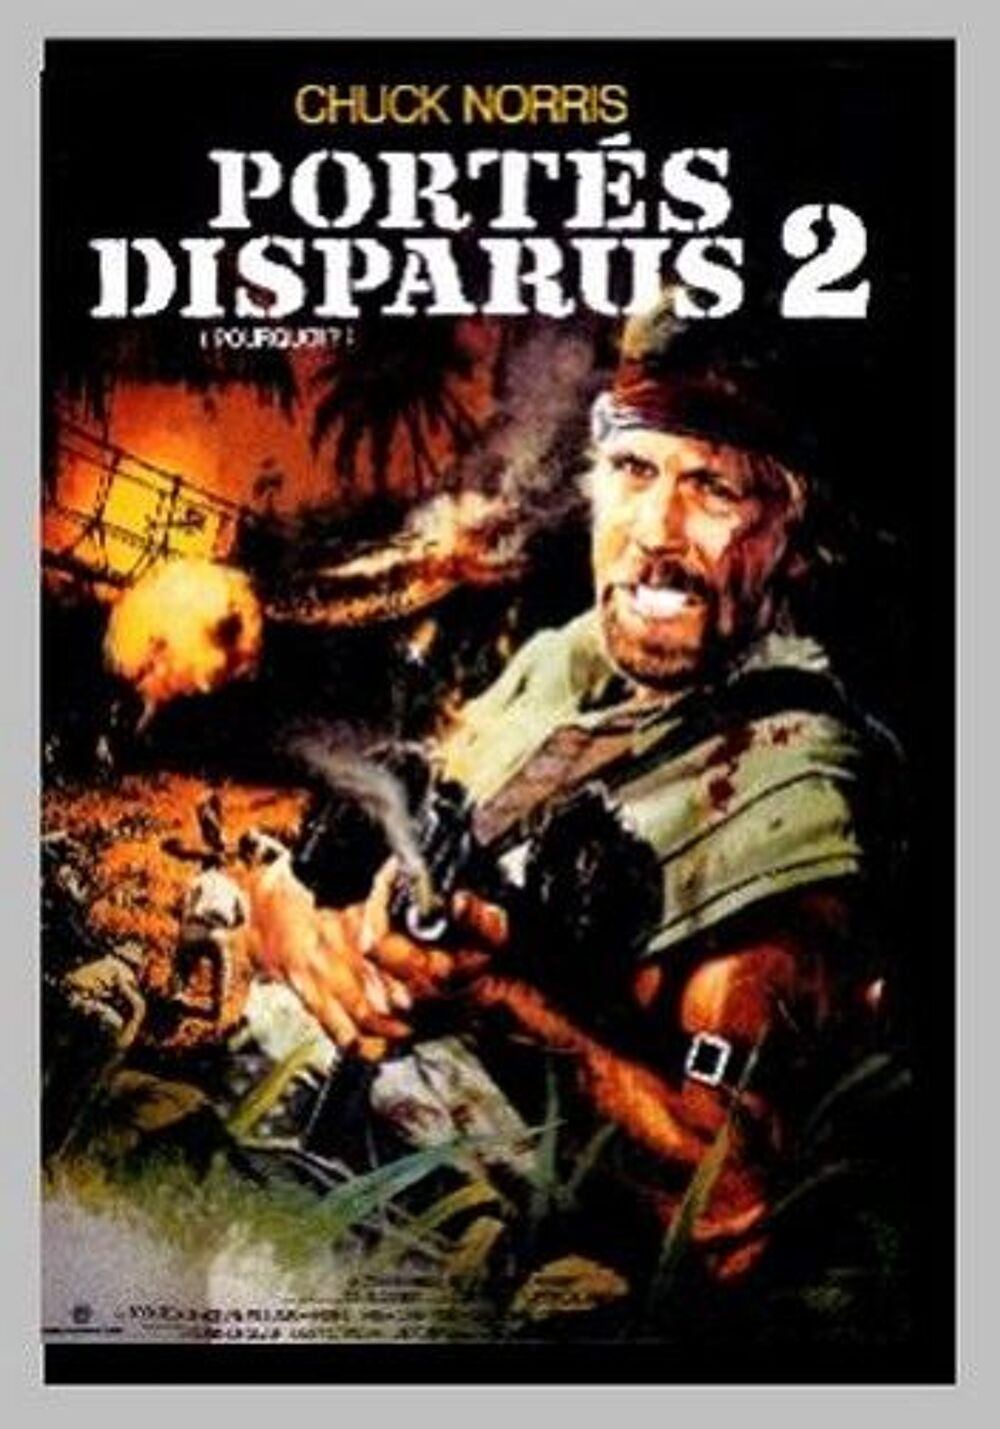 PORTES DISPARUS 2 et 3 BRADDOCK (chuck norris) DVD et blu-ray